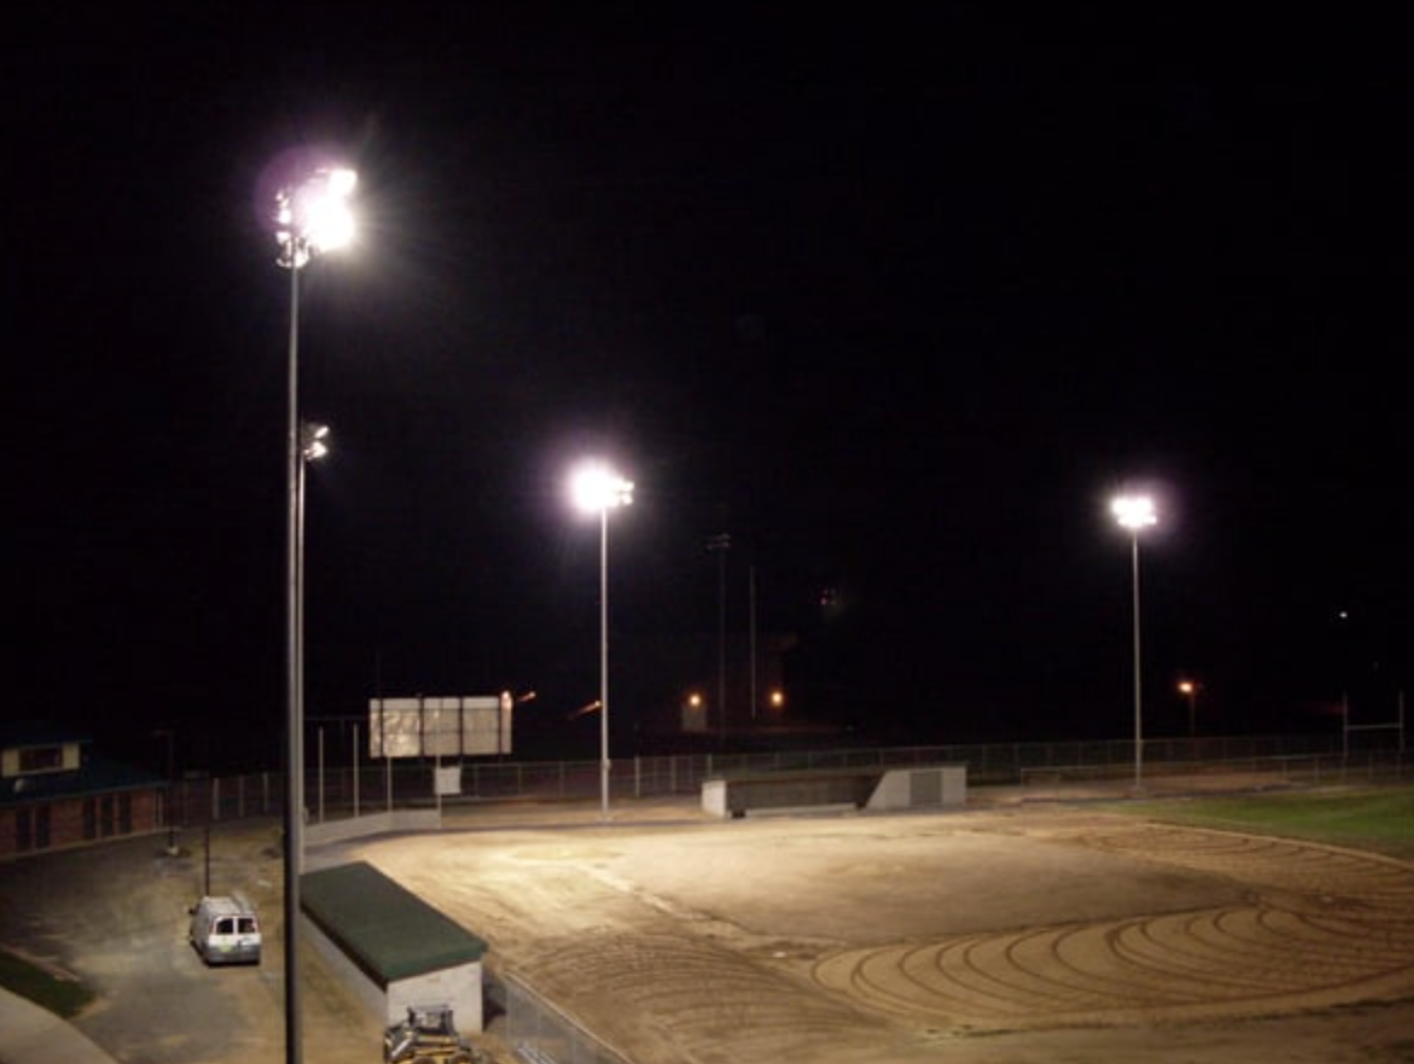 Diagram showcasing a lighting fixture emitting light onto a baseball field.